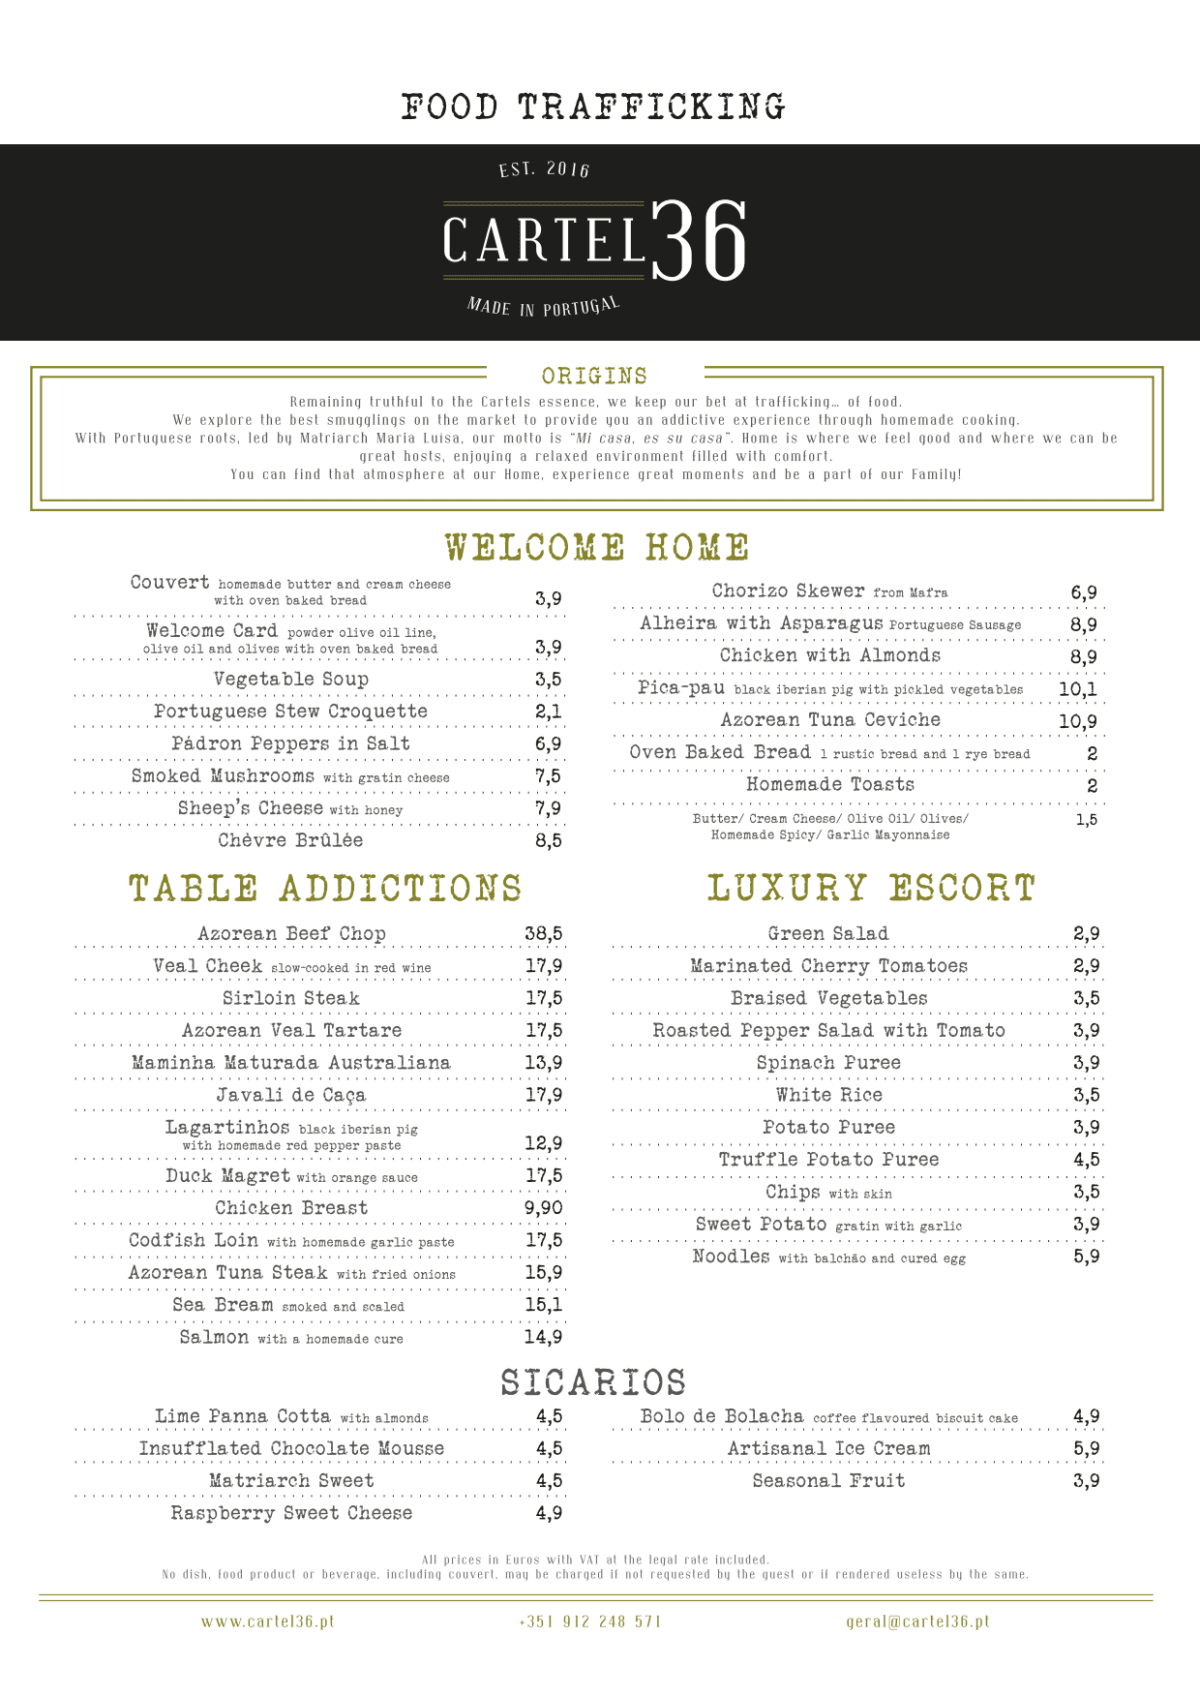 Cartel 36 menu